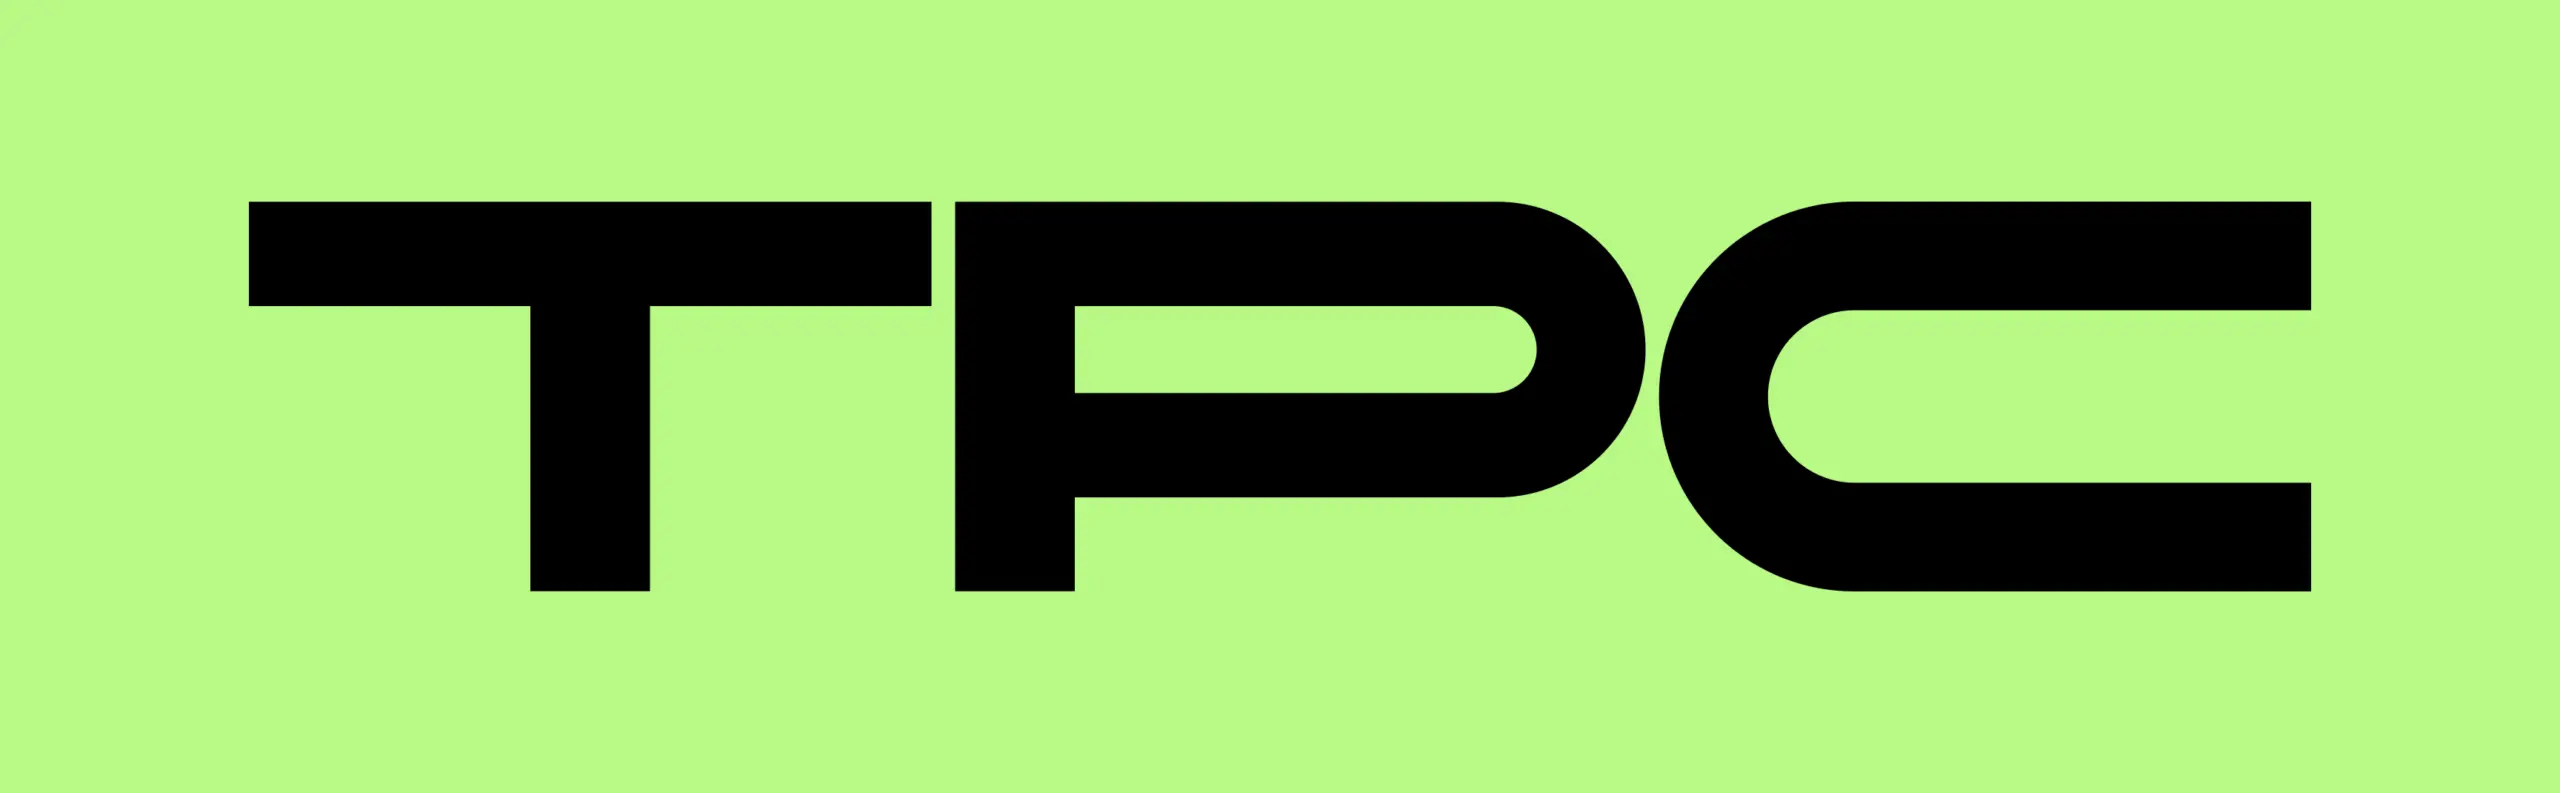 TPC logo on a light background